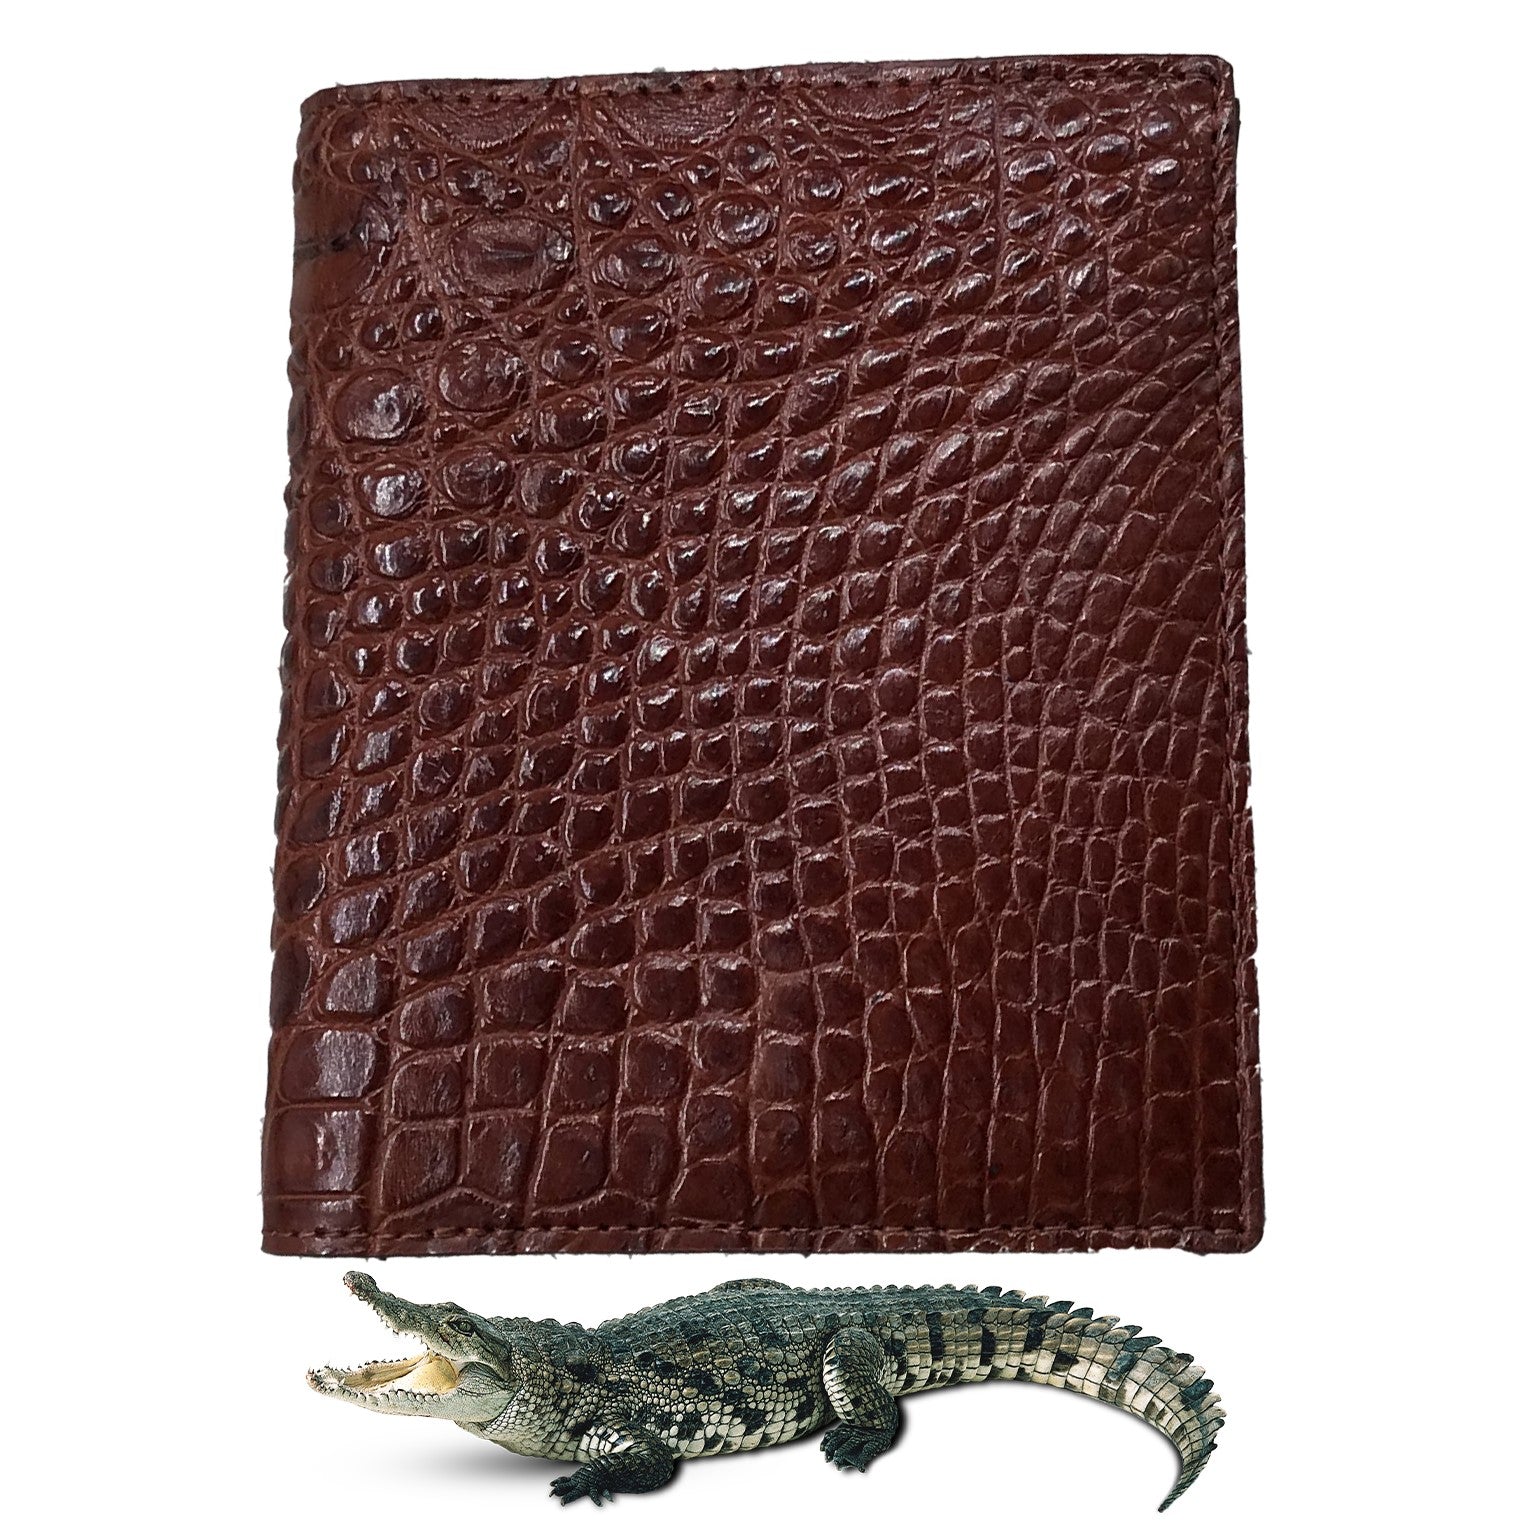 Brown Alligator Skin Bifold Vertical Wallet For Men | Handmade Crocodile Leather Wallet RFID Blocking | VL5687 - Vinacreations